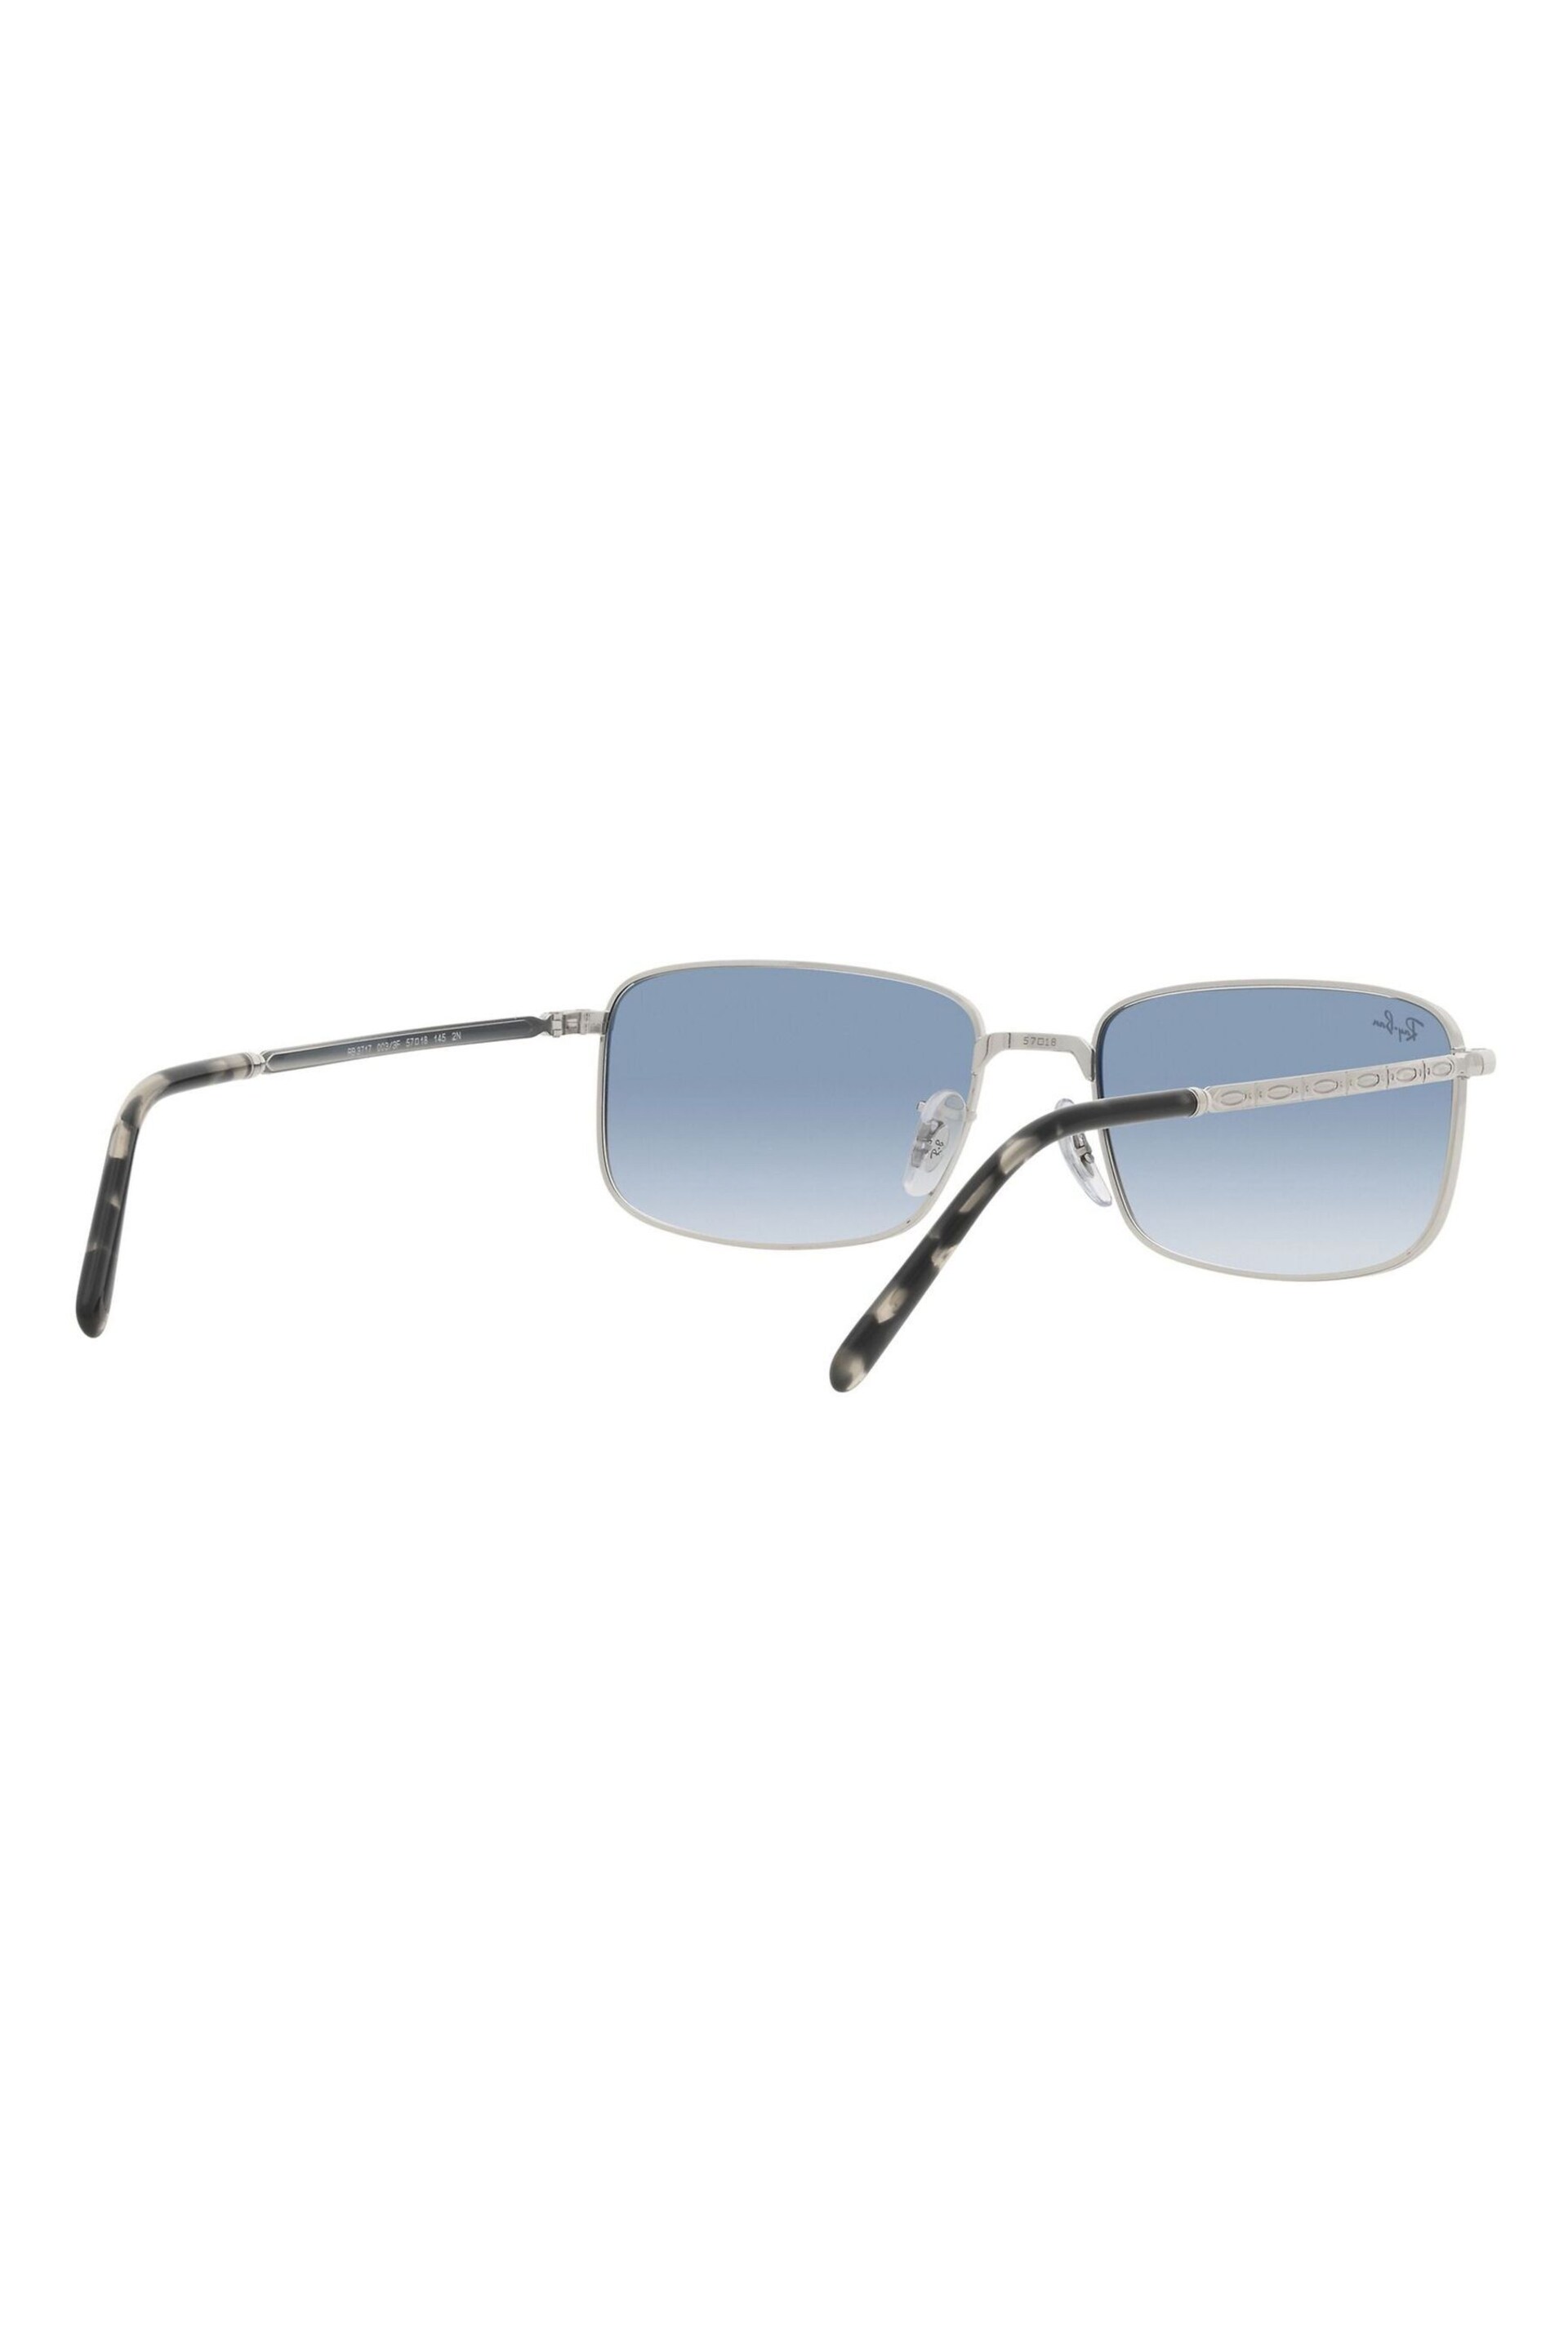 Ray-Ban Silver Sunglasses - Image 6 of 11